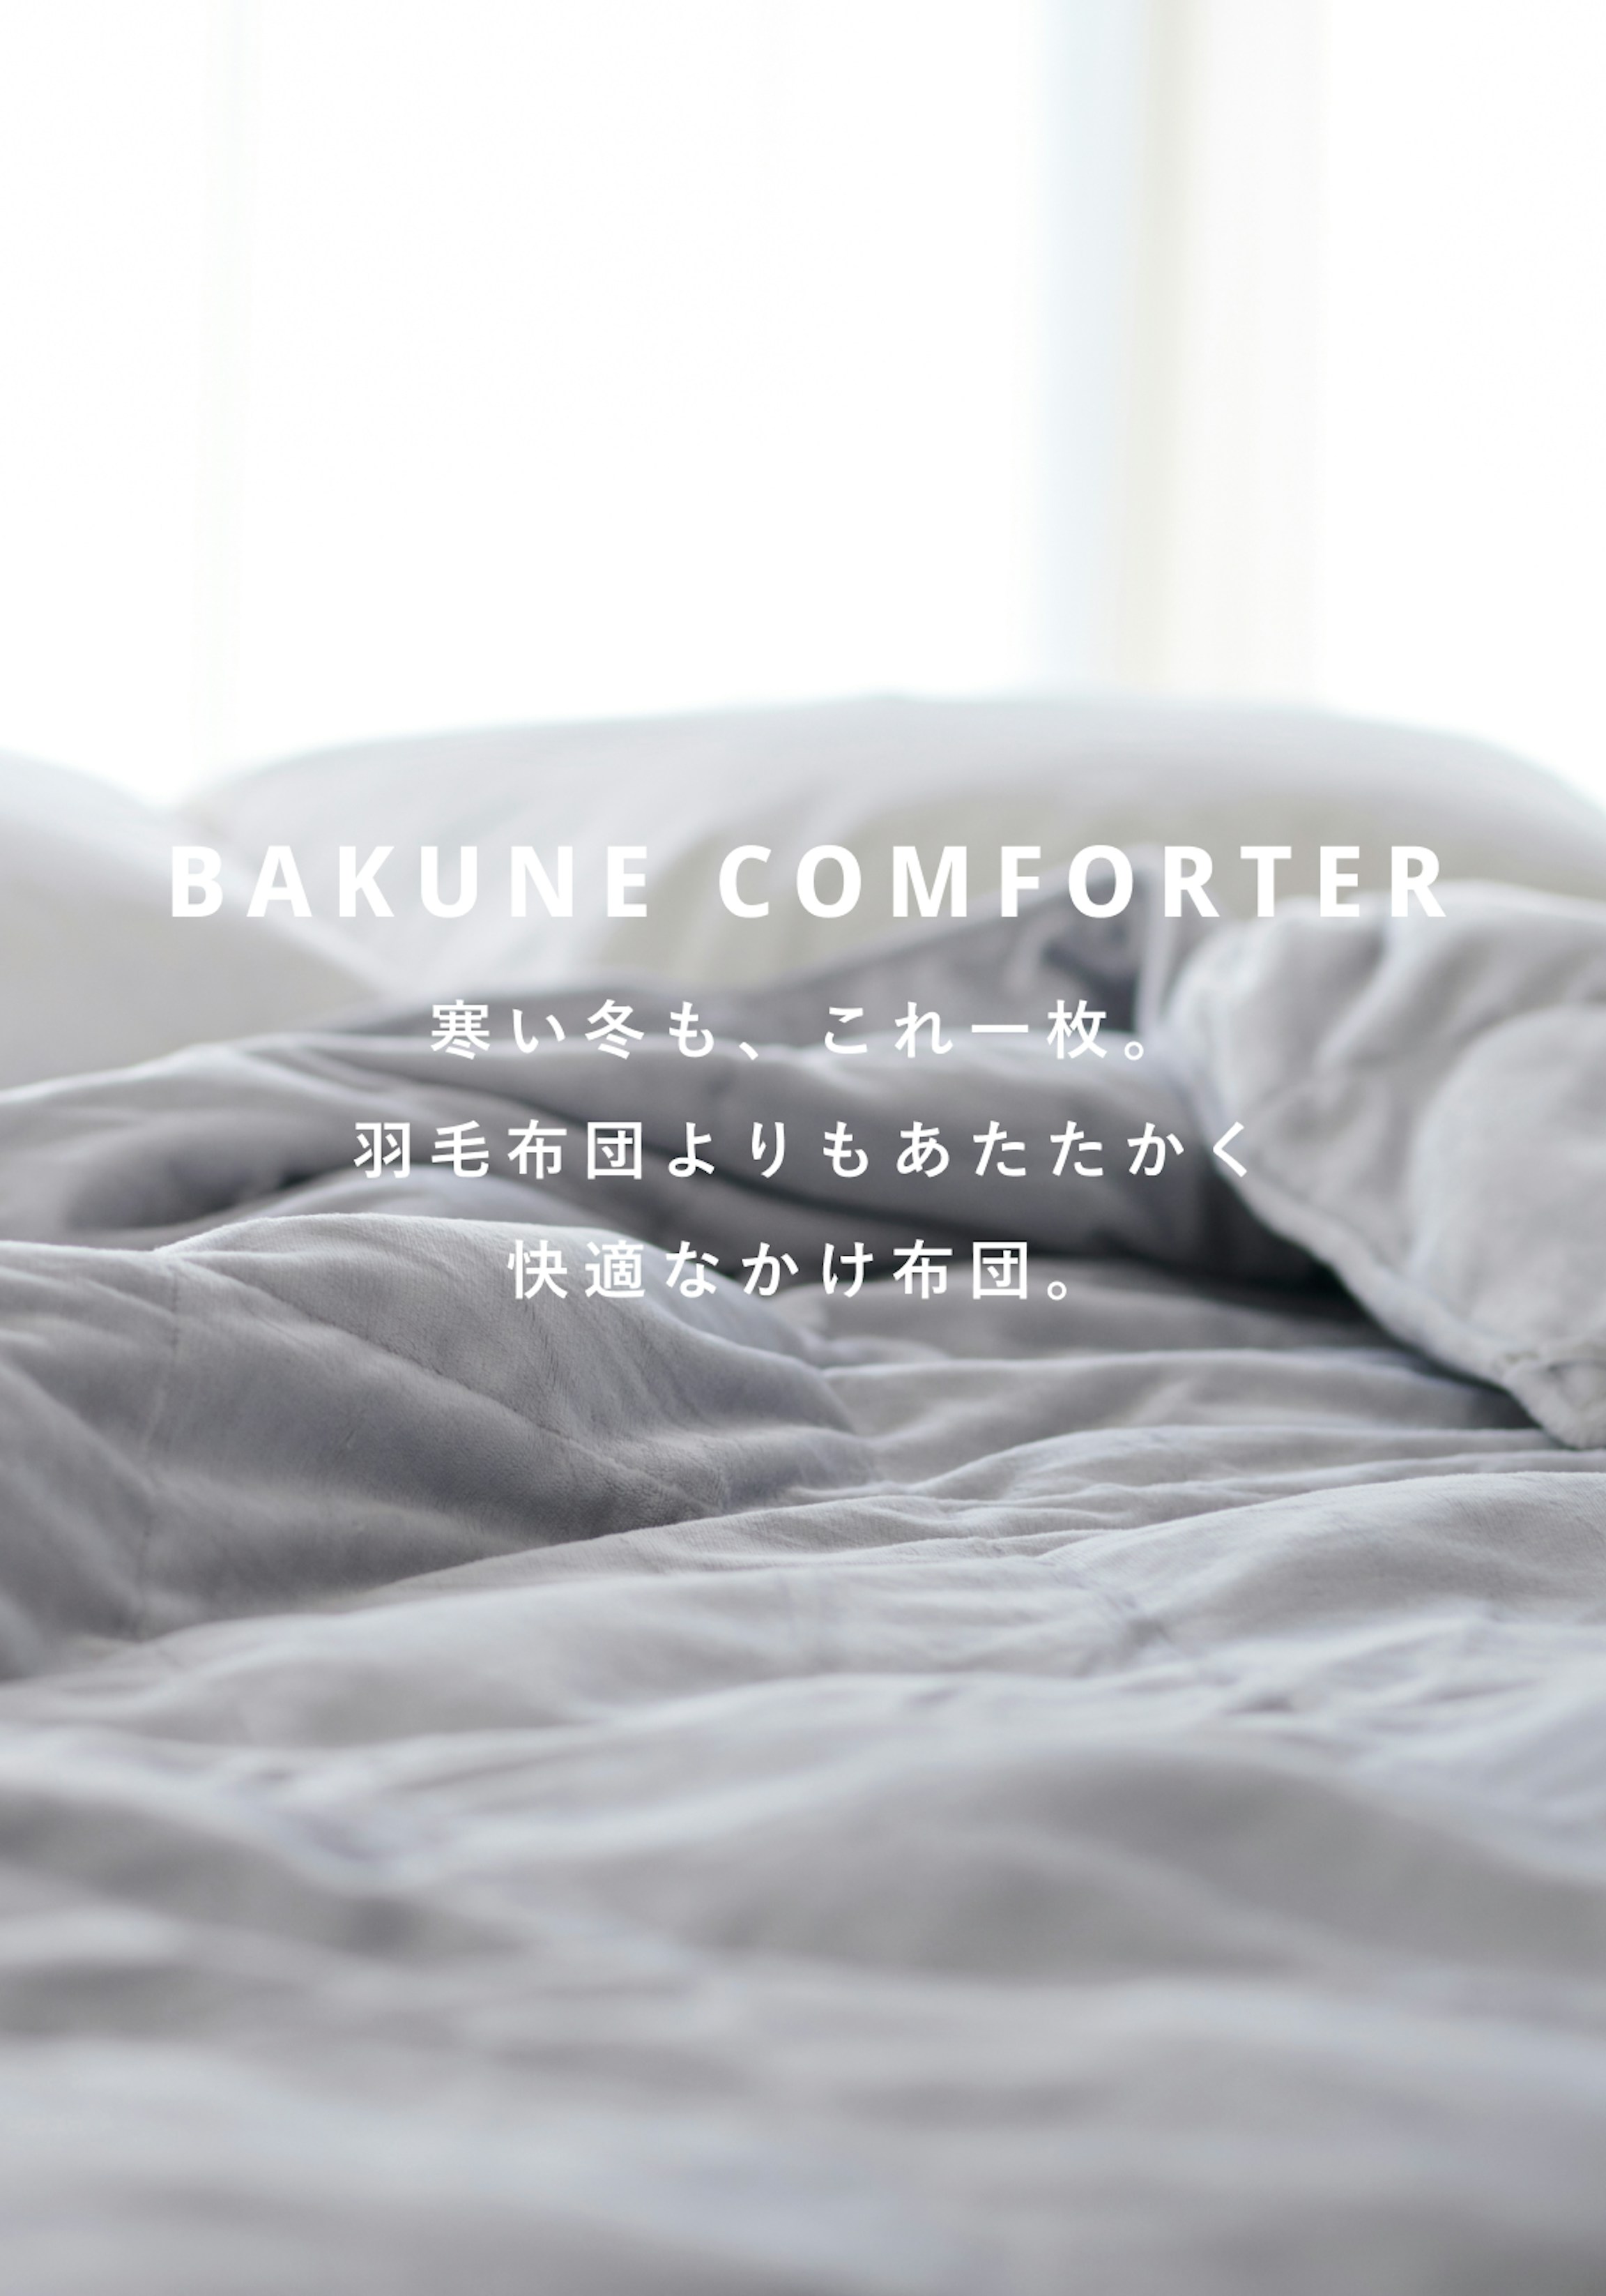 BAKUNE COMFORTER（かけ布団） | TENTIAL[テンシャル] 公式オンライン 